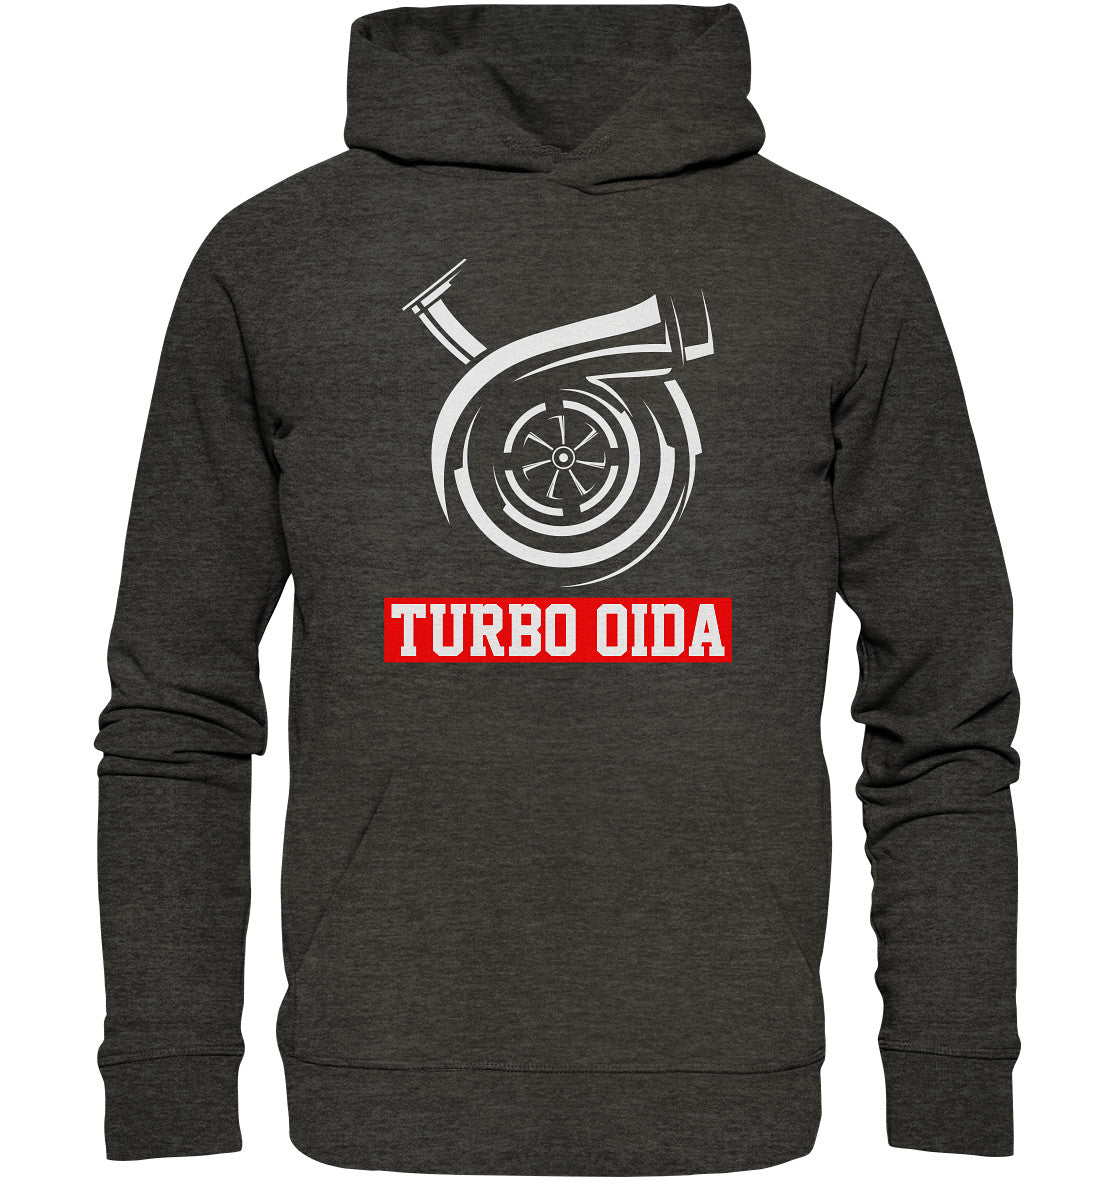 Turbo Oida - Organic   Hoodie